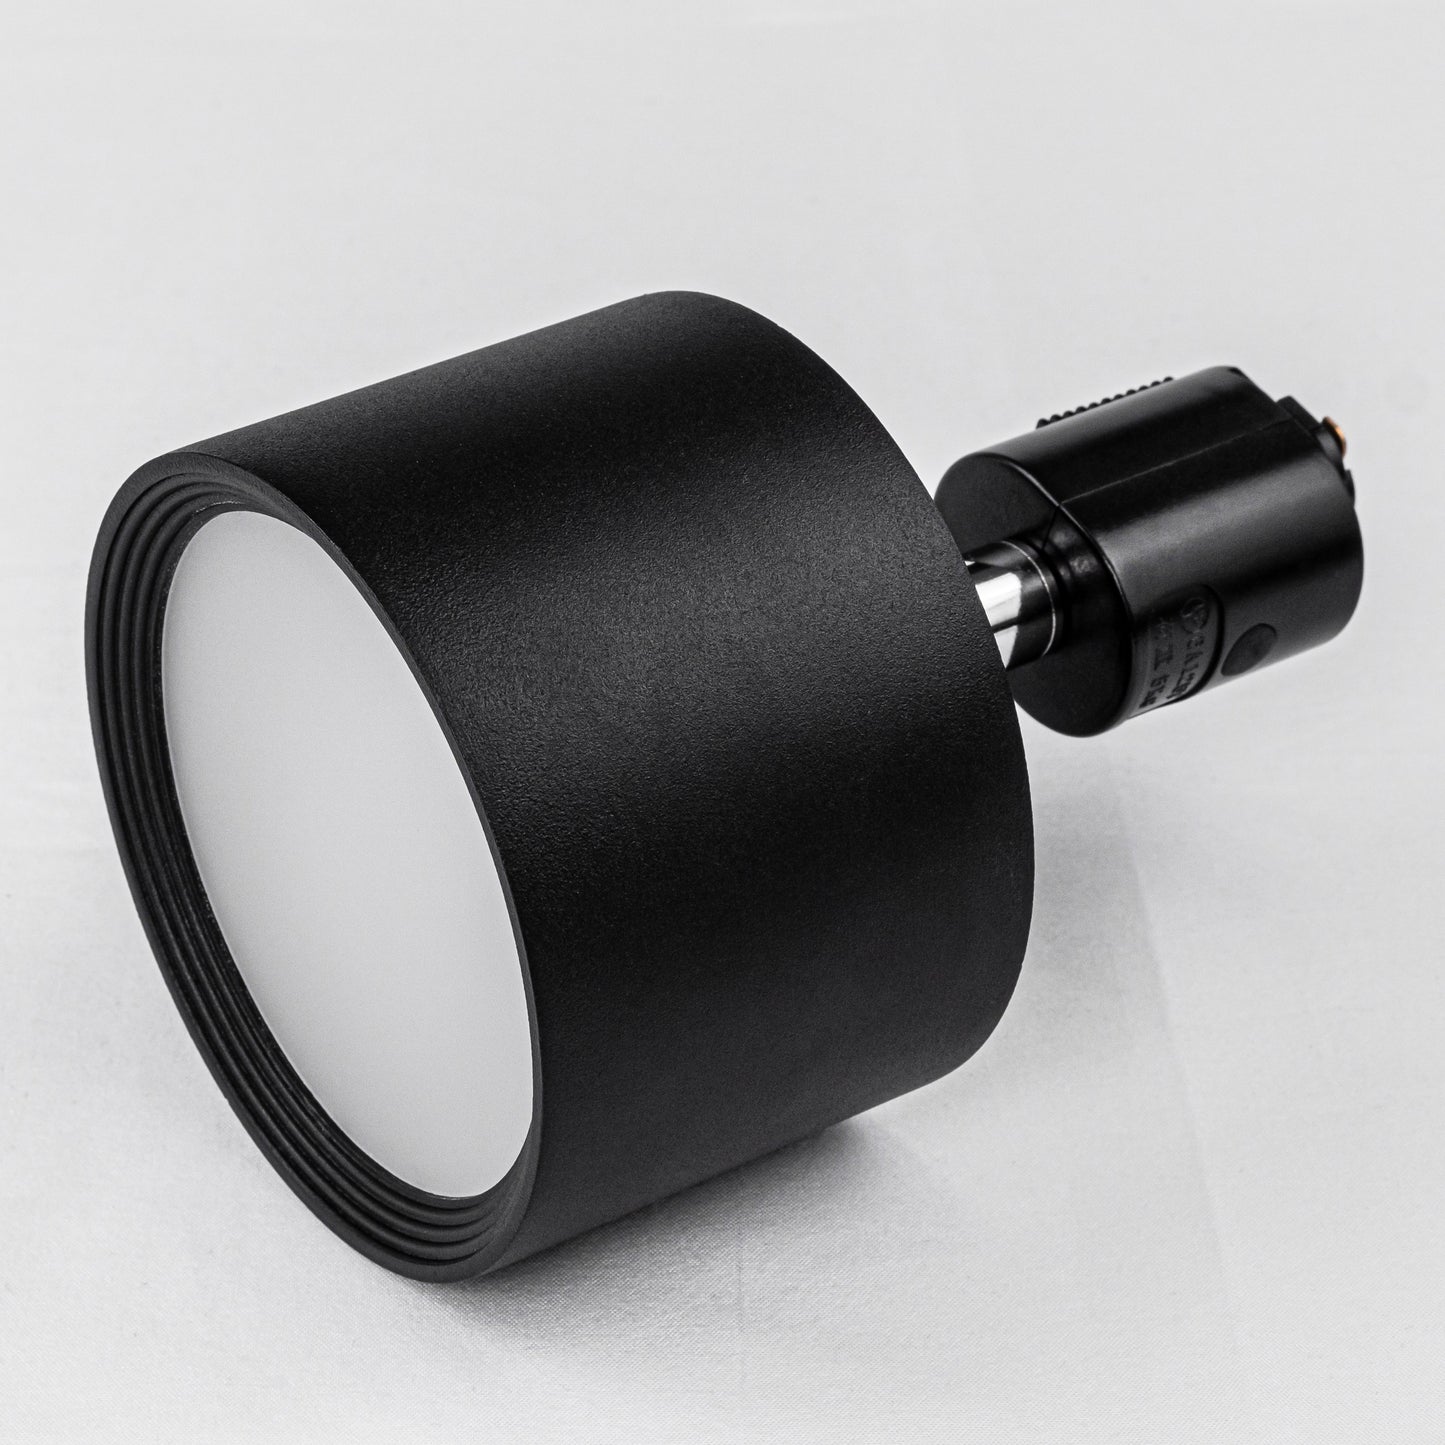 FSLiving 9W(100W相当) ダウンライト リモコン付き 調光 調色 角度調節可 LED ライティングレールライト LED内蔵 スポットライト ライティングレール照明 天井 ダイニング リビング用